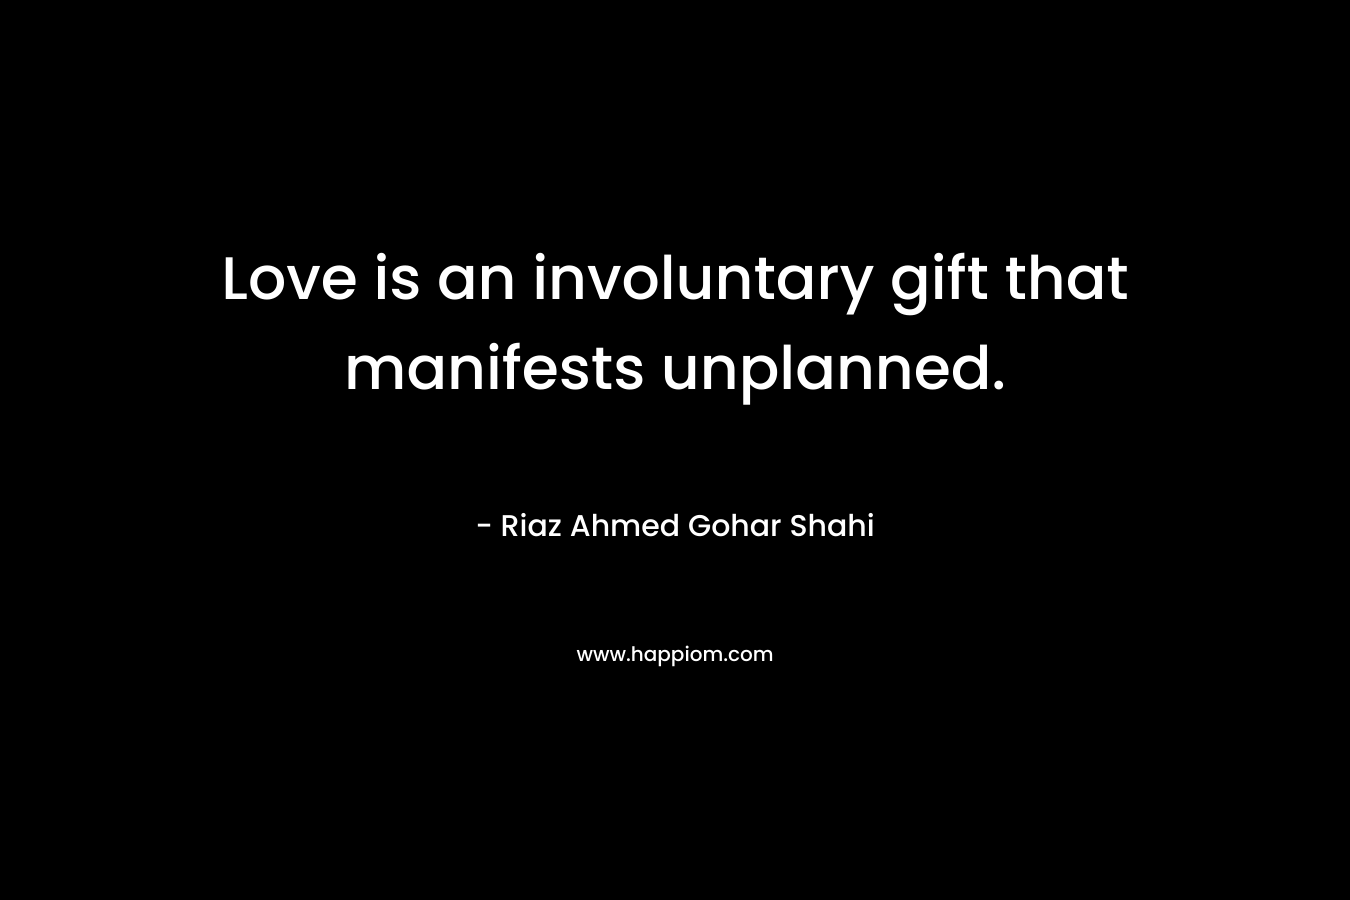 Love is an involuntary gift that manifests unplanned. – Riaz Ahmed Gohar Shahi